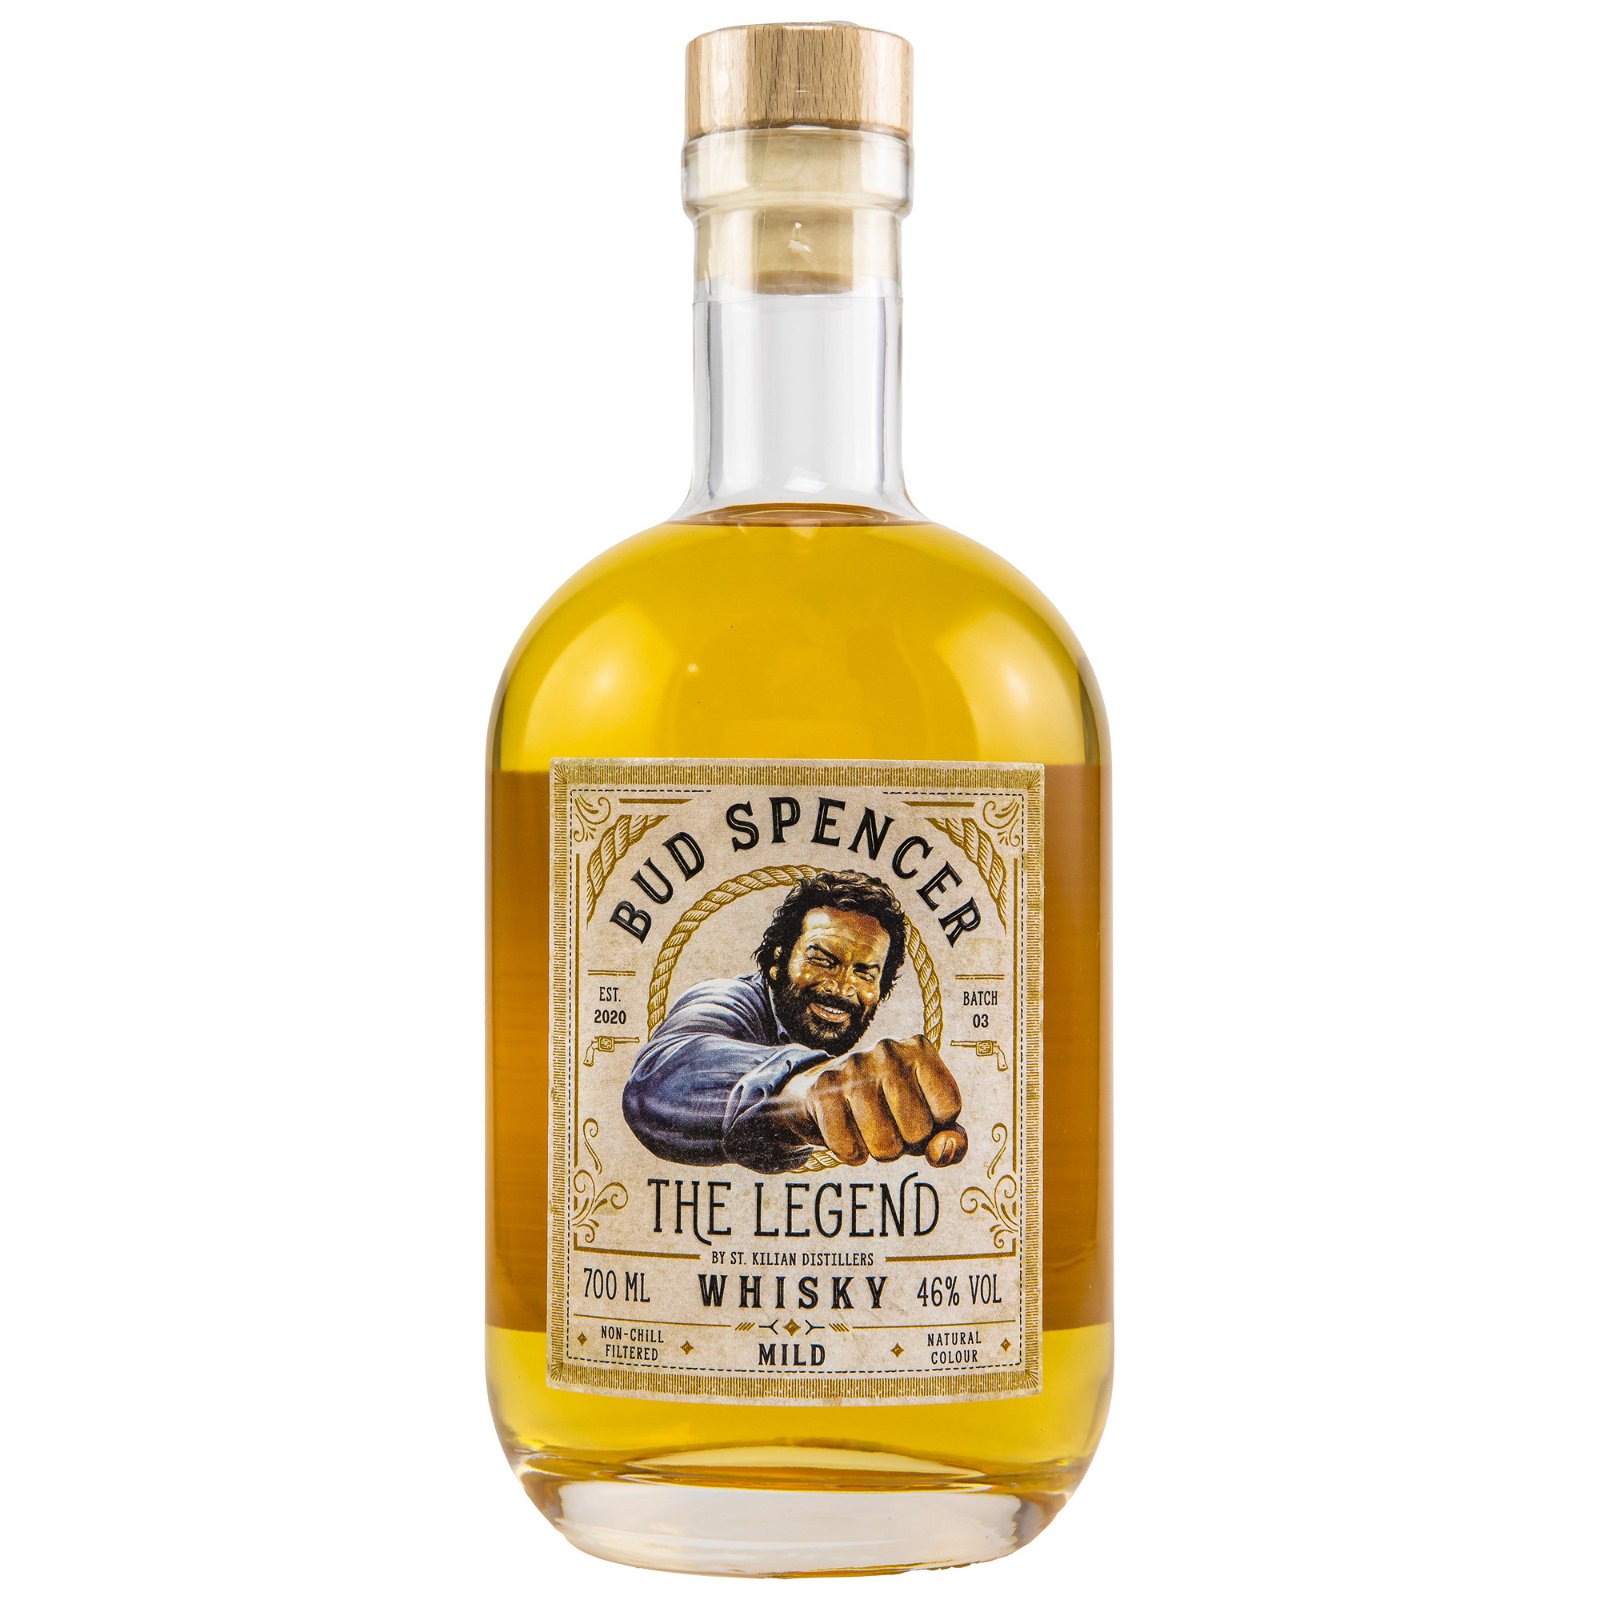 Bud Spencer The Legend Whisky Mild